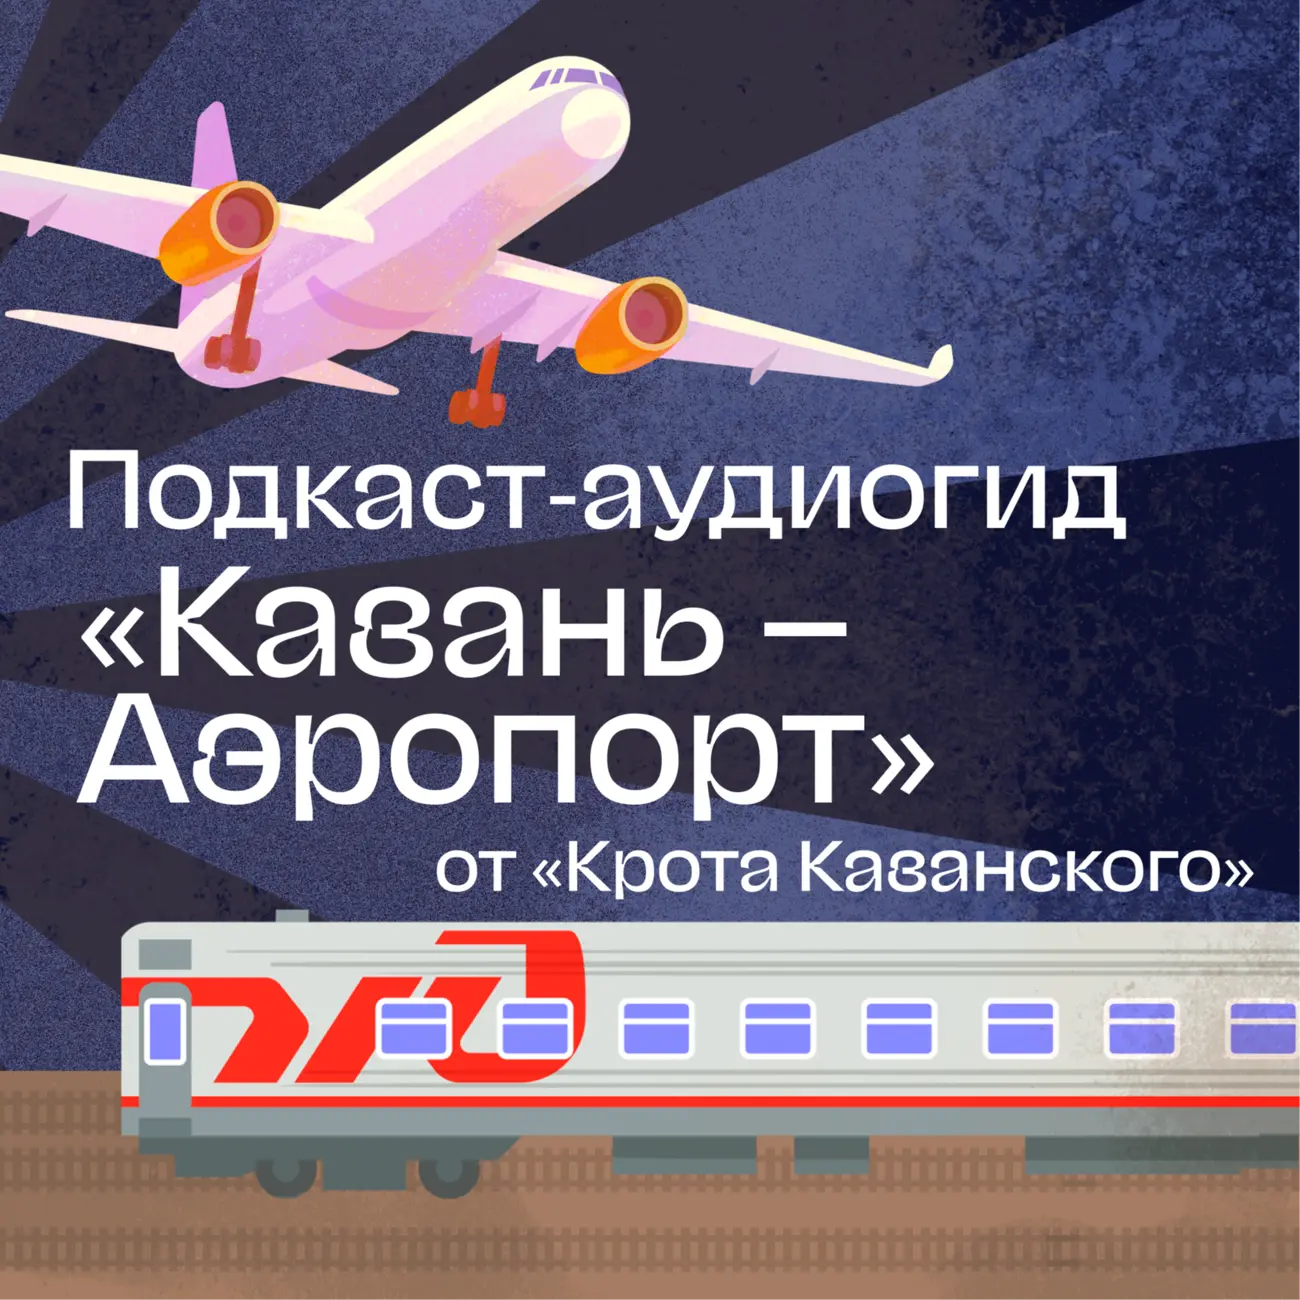 Электричка «Казань–Аэропорт–Казань»: подкаст-аудиогид